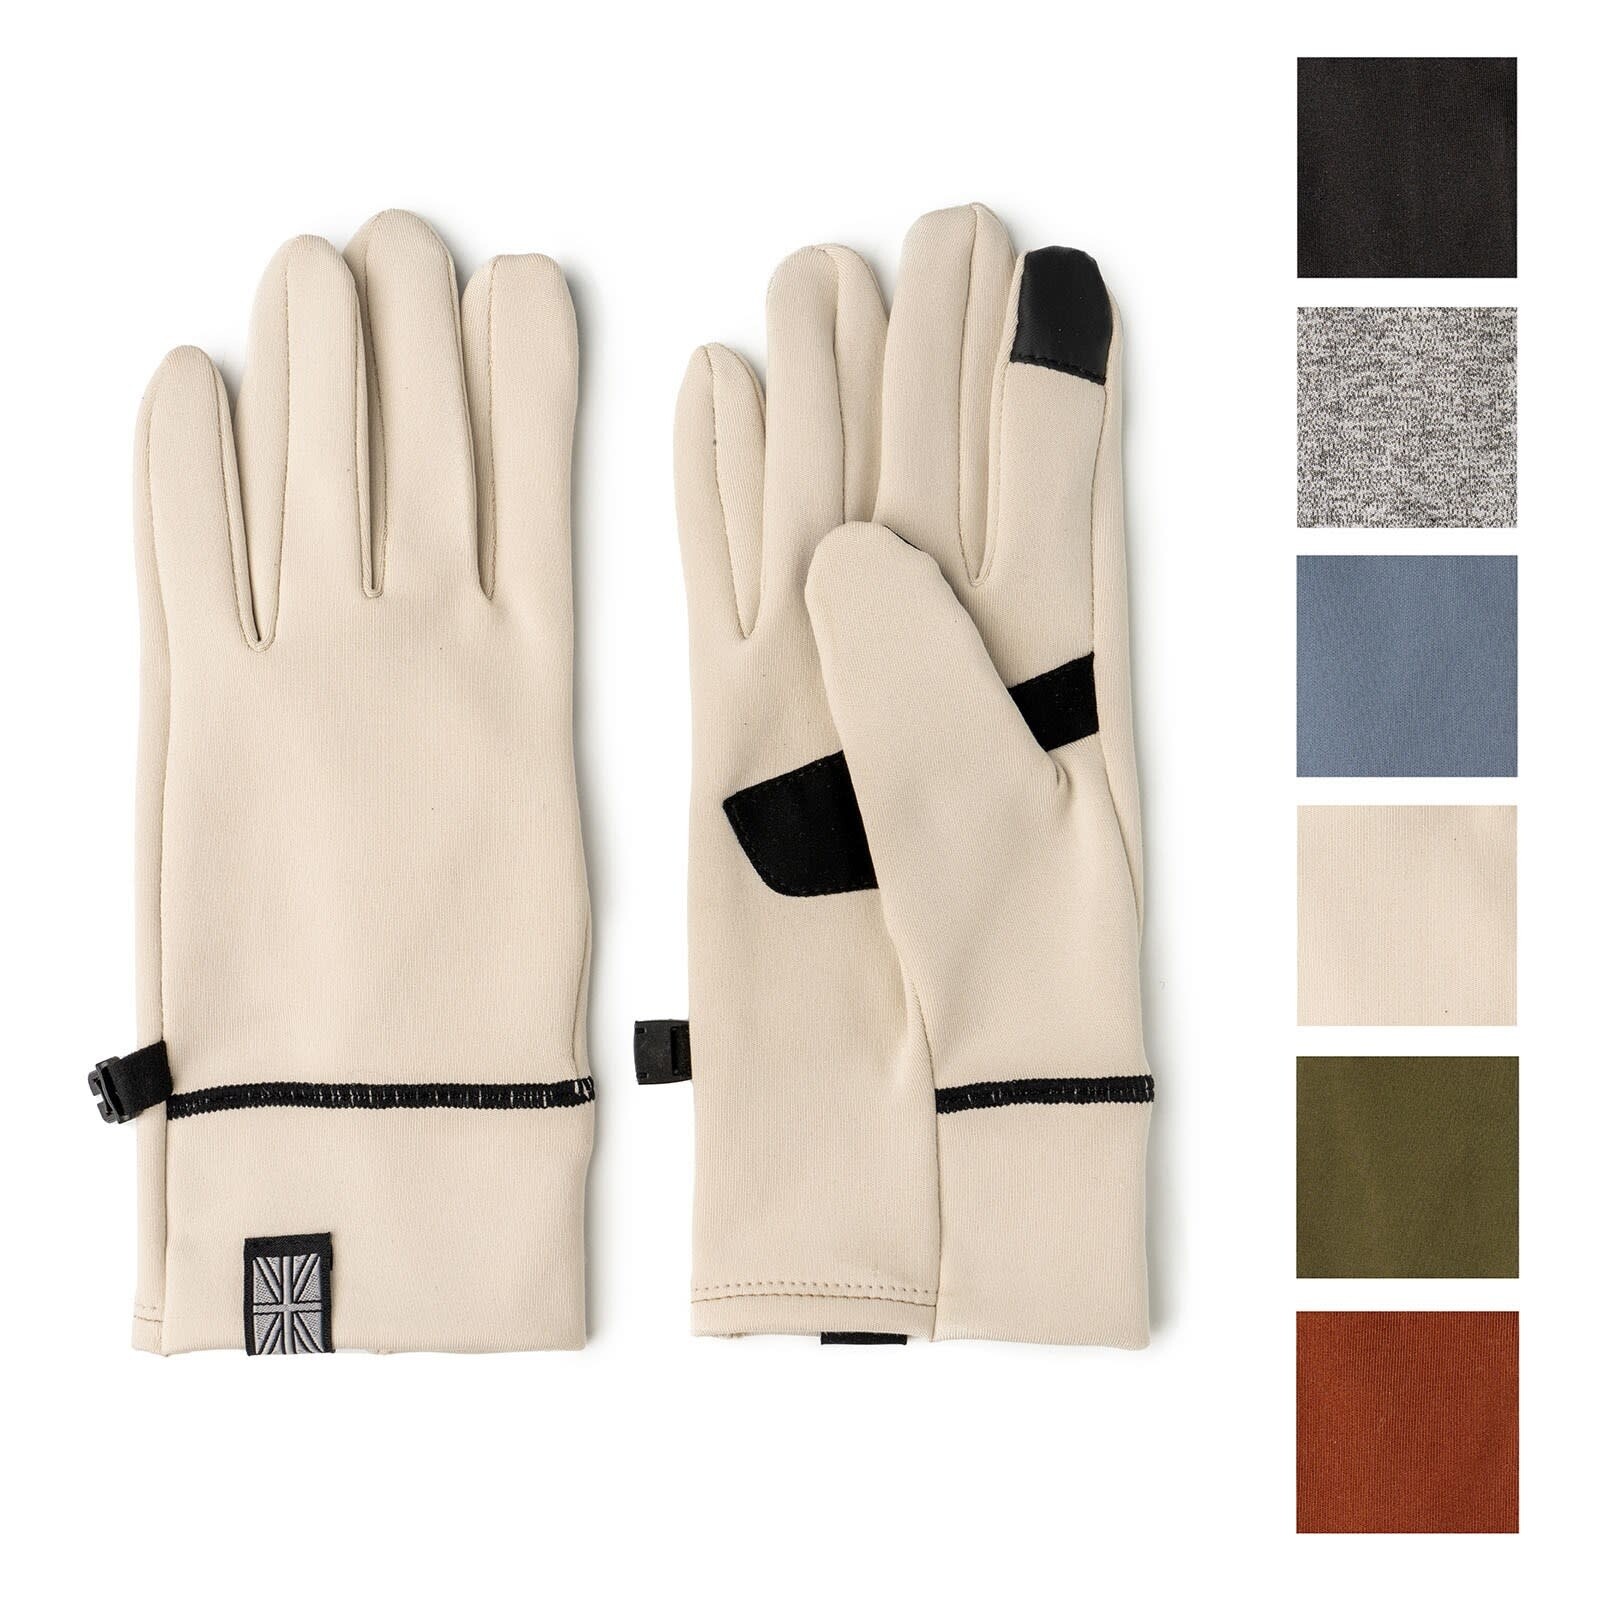 DM Merchandising Britt's Knits Thermaltech Gloves   BKTTG2-U24 loading=